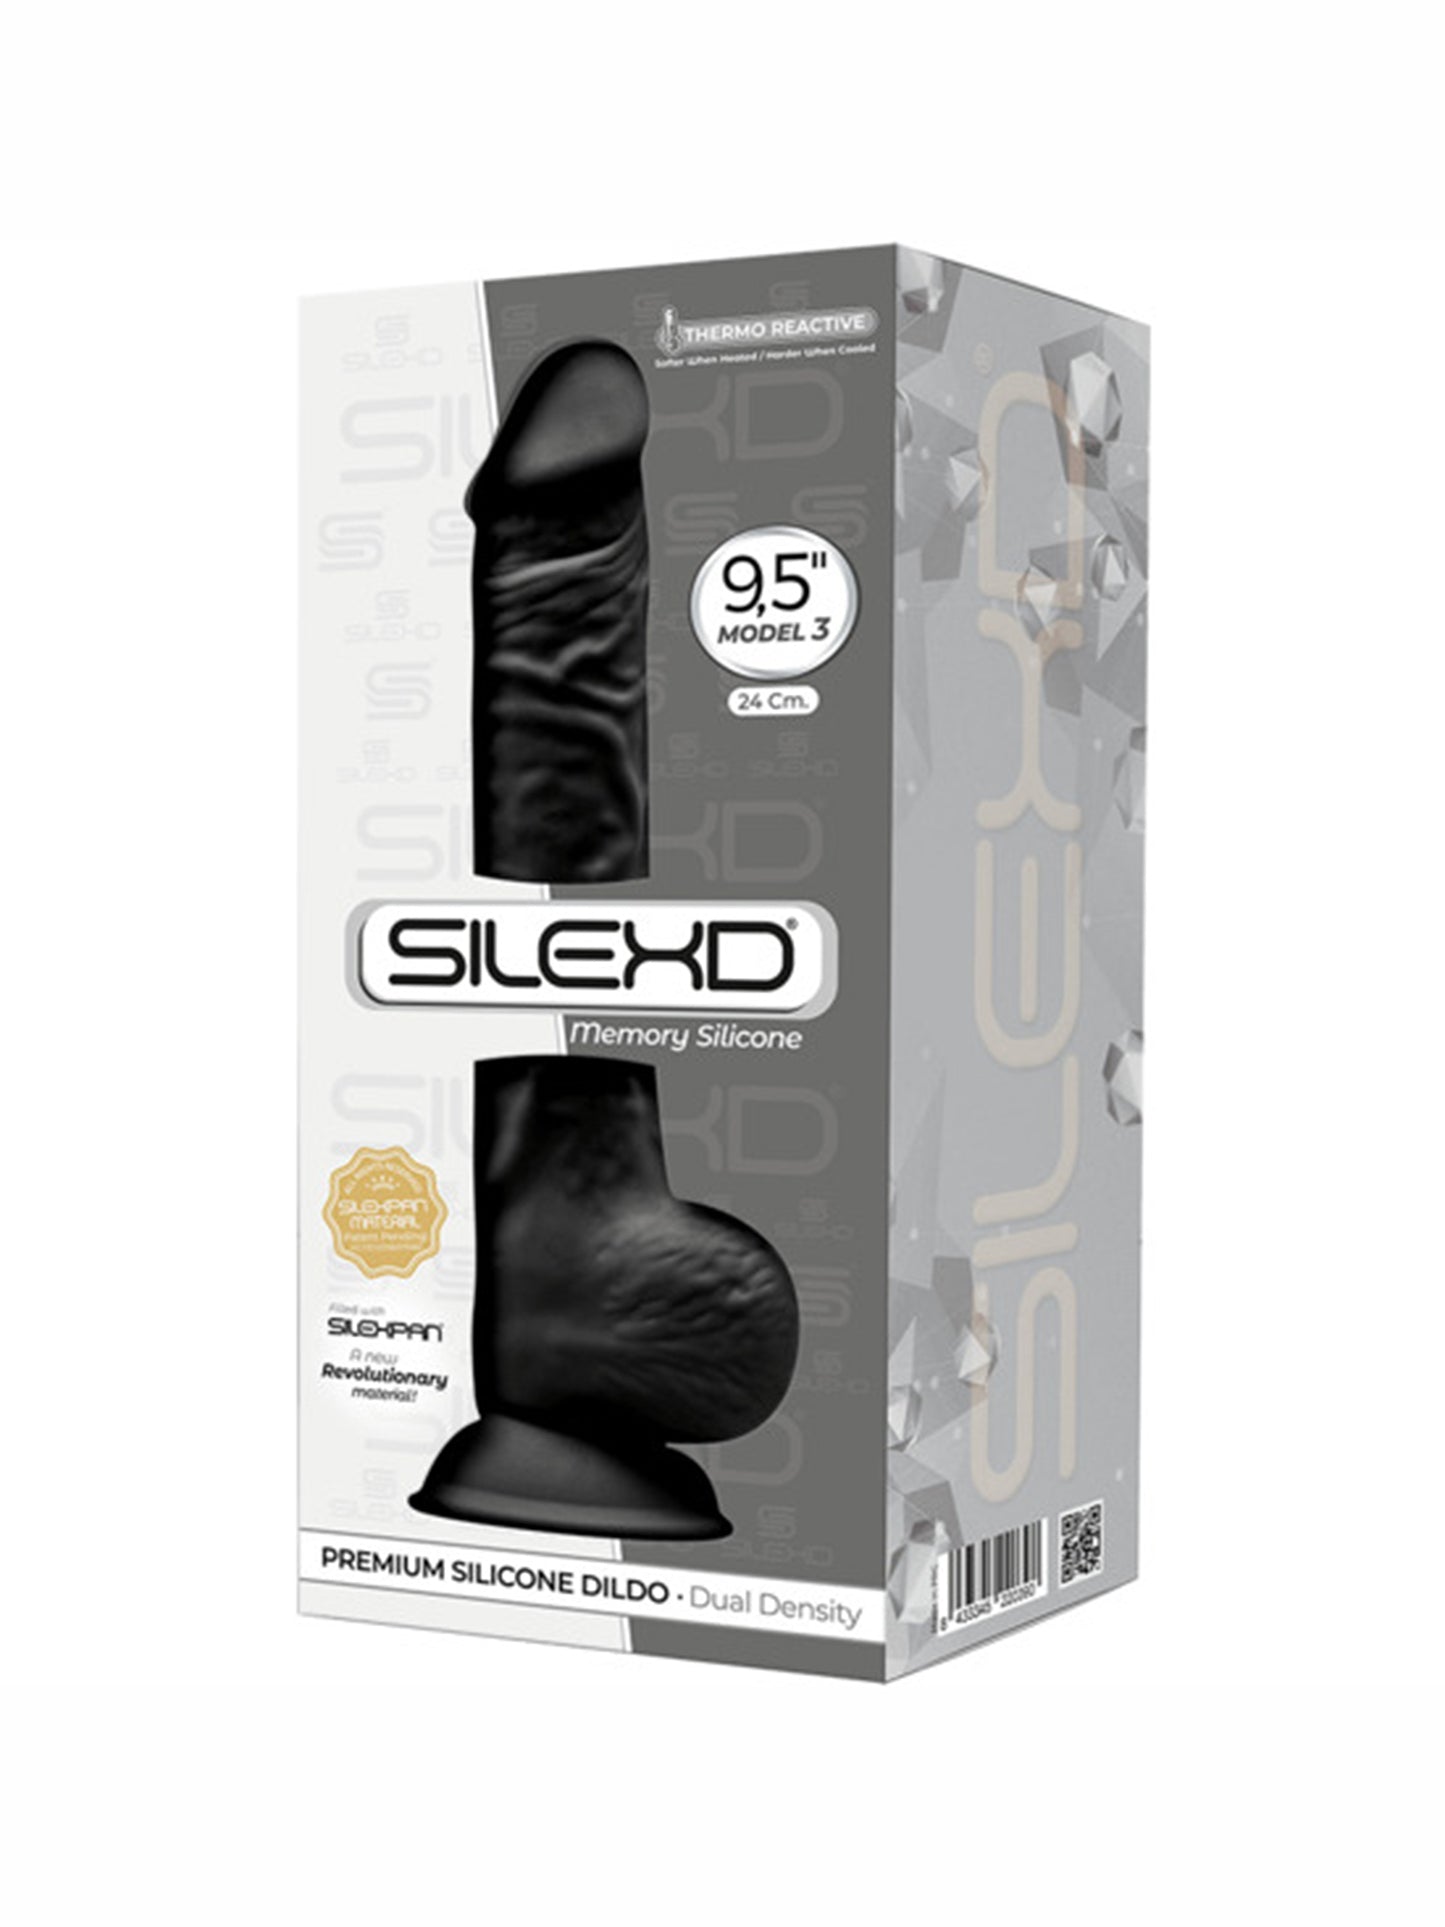 SILEXD - Dildo Double Density Realistic Dildo - Model 3 - 24 cm